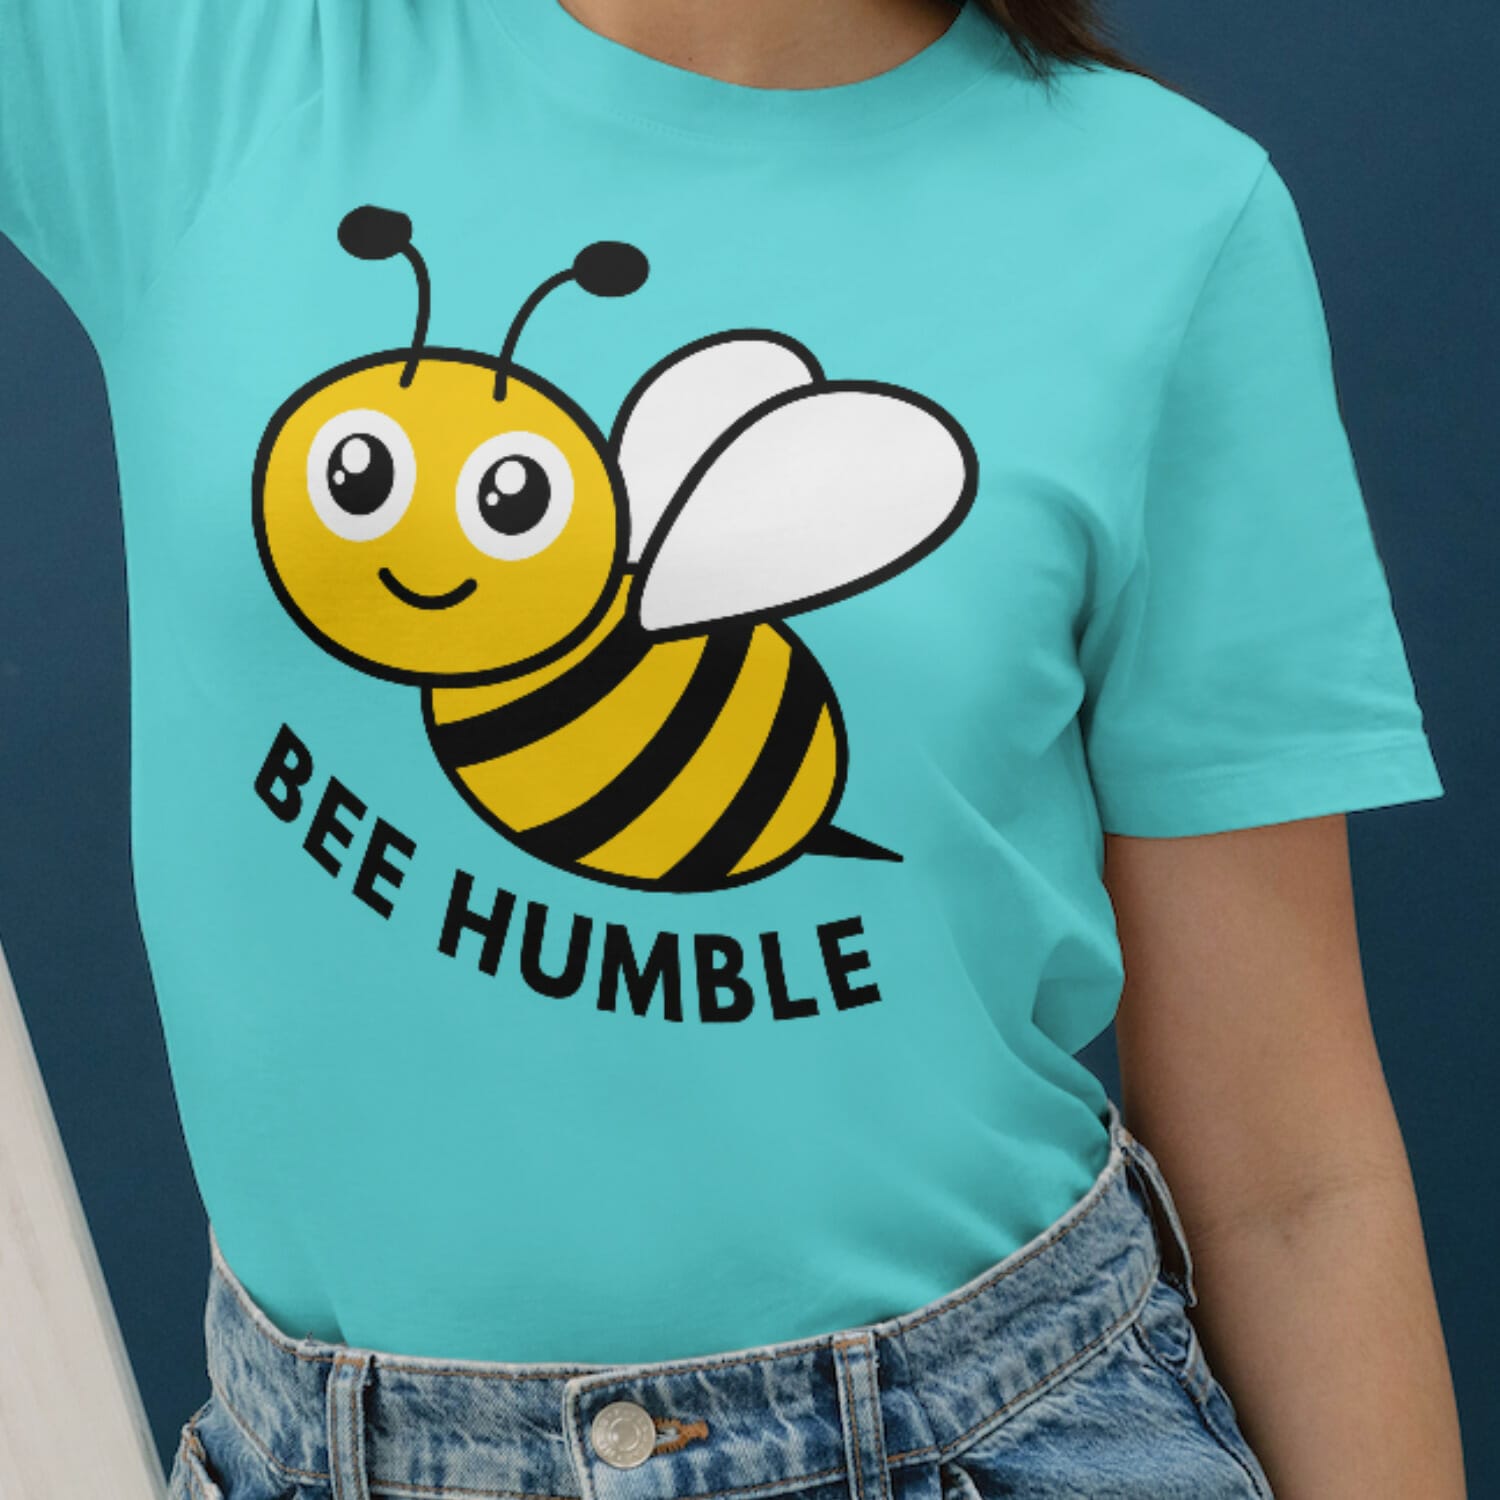 Bee humble Tshirt design